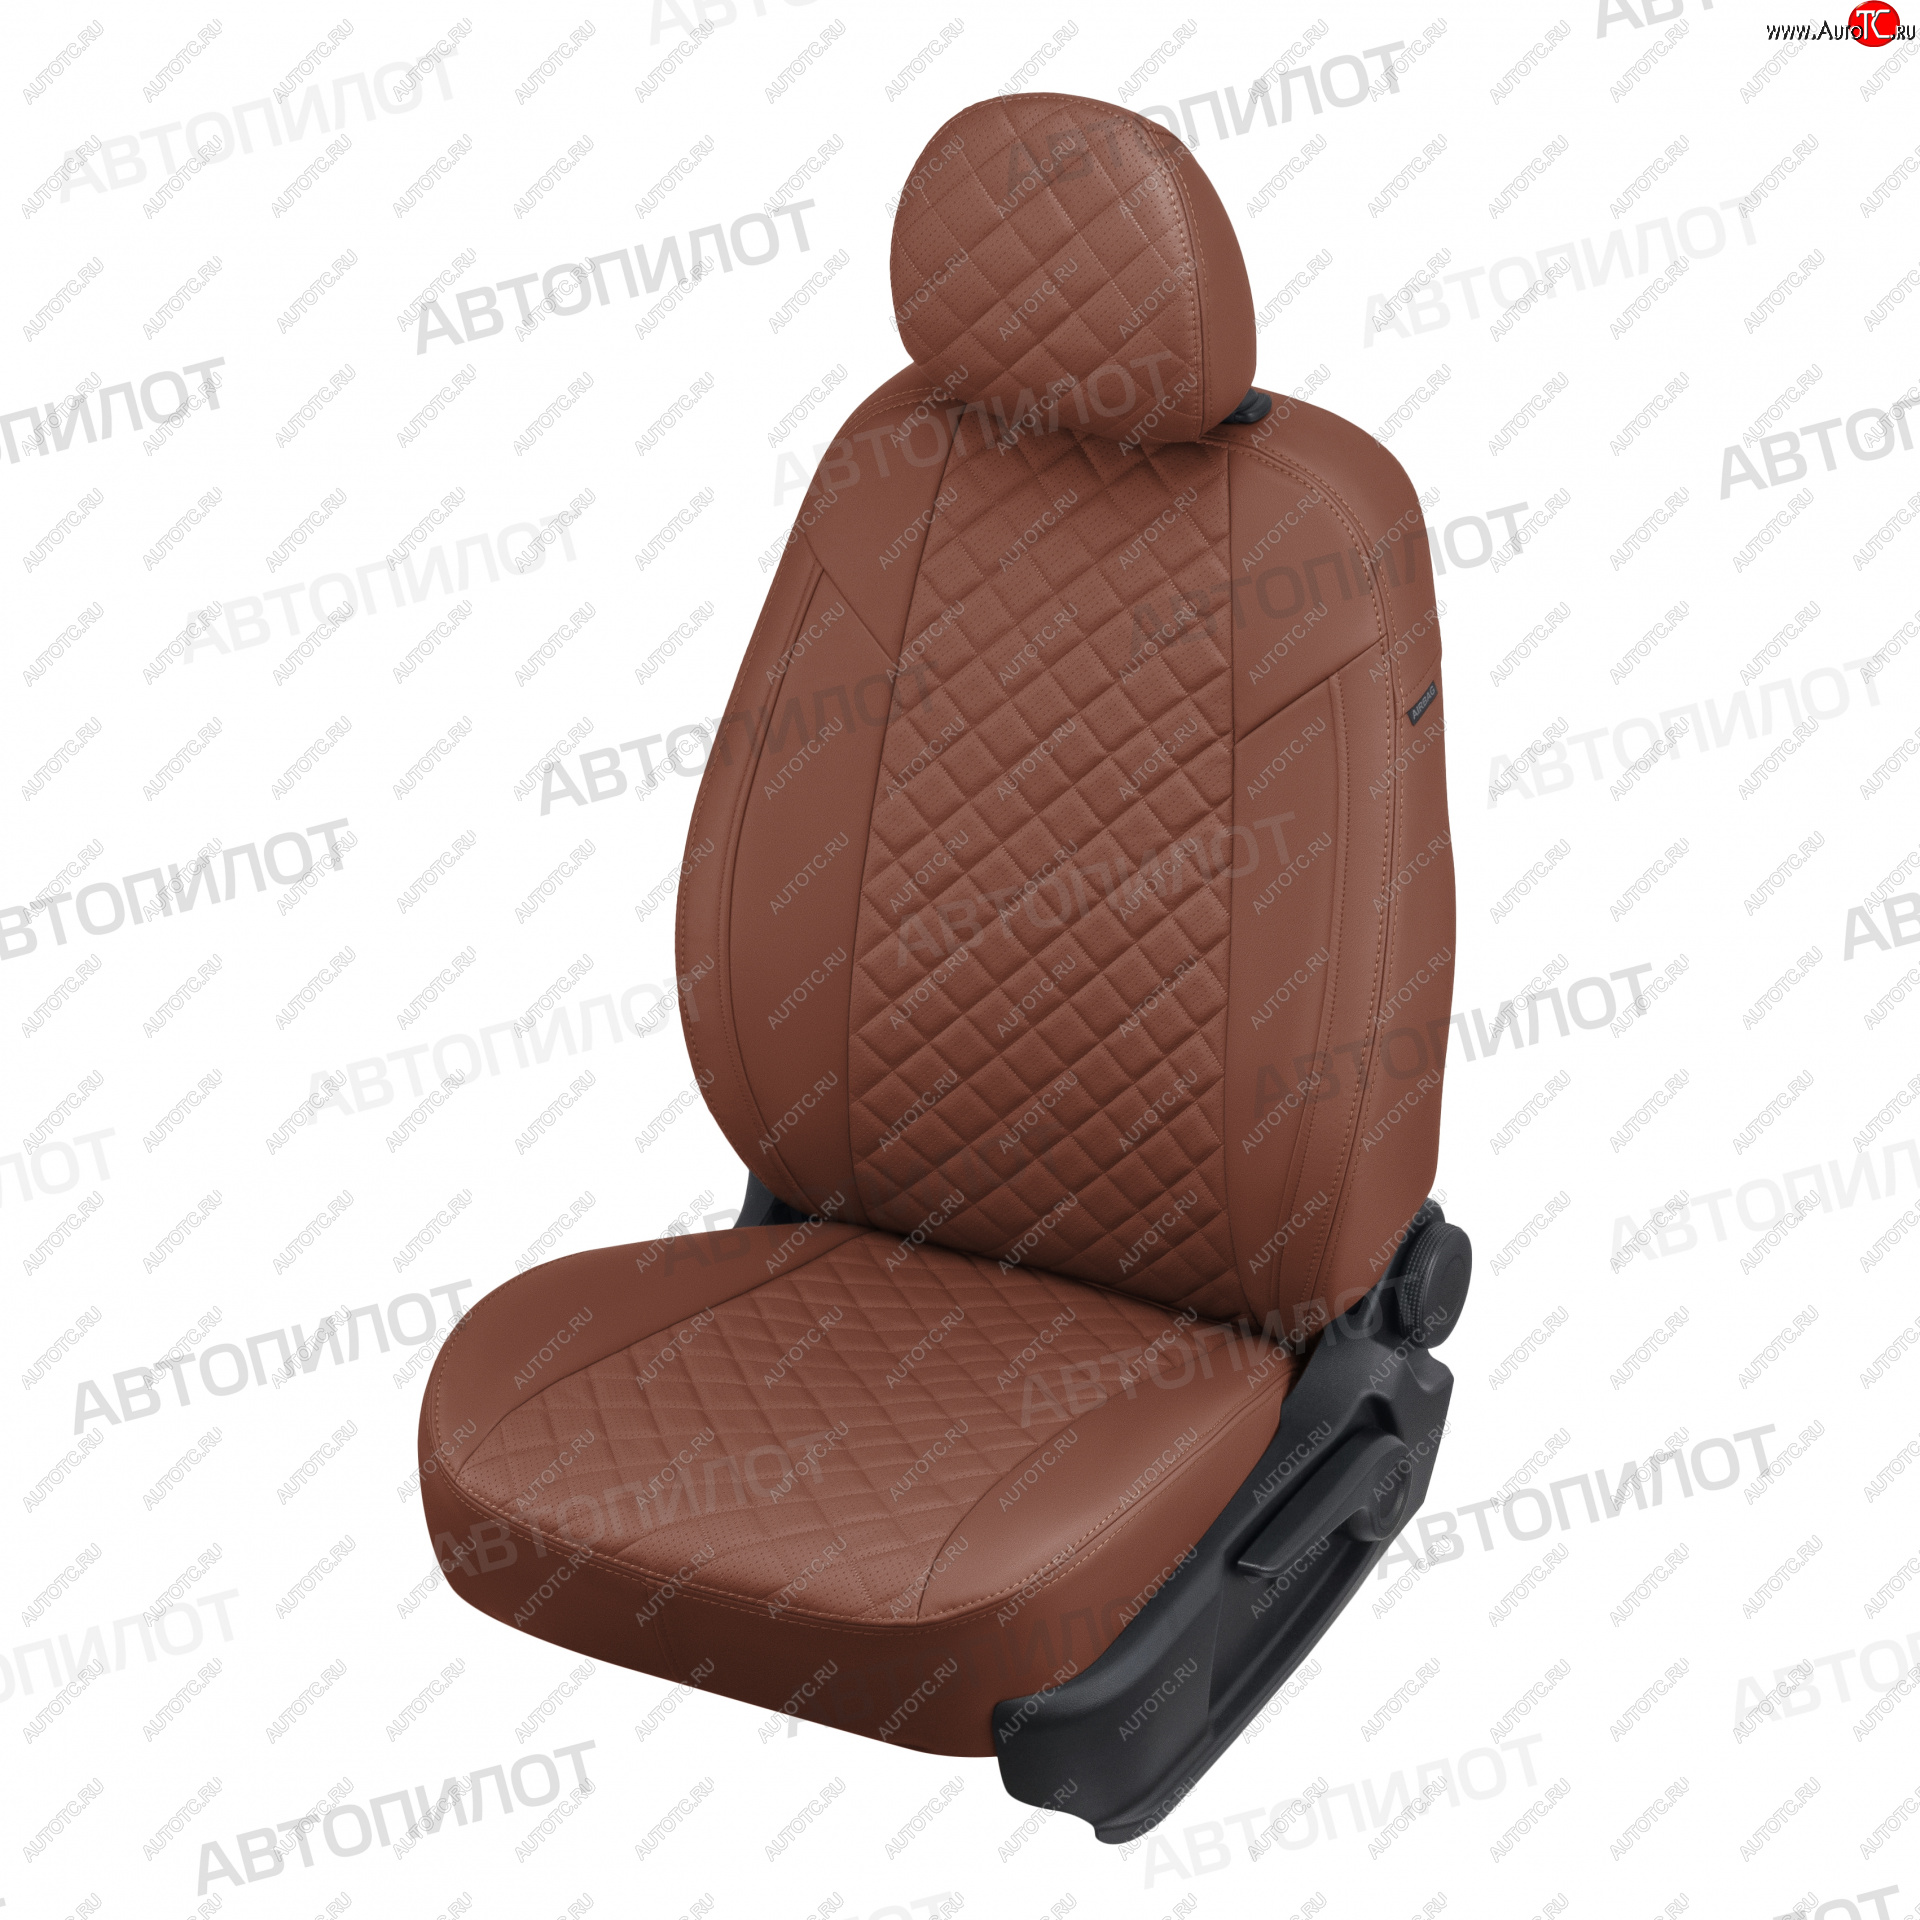 13 999 р. Чехлы сидений (экокожа) Автопилот Ромб  KIA Rio  1 DC (2000-2005) (коричневый)